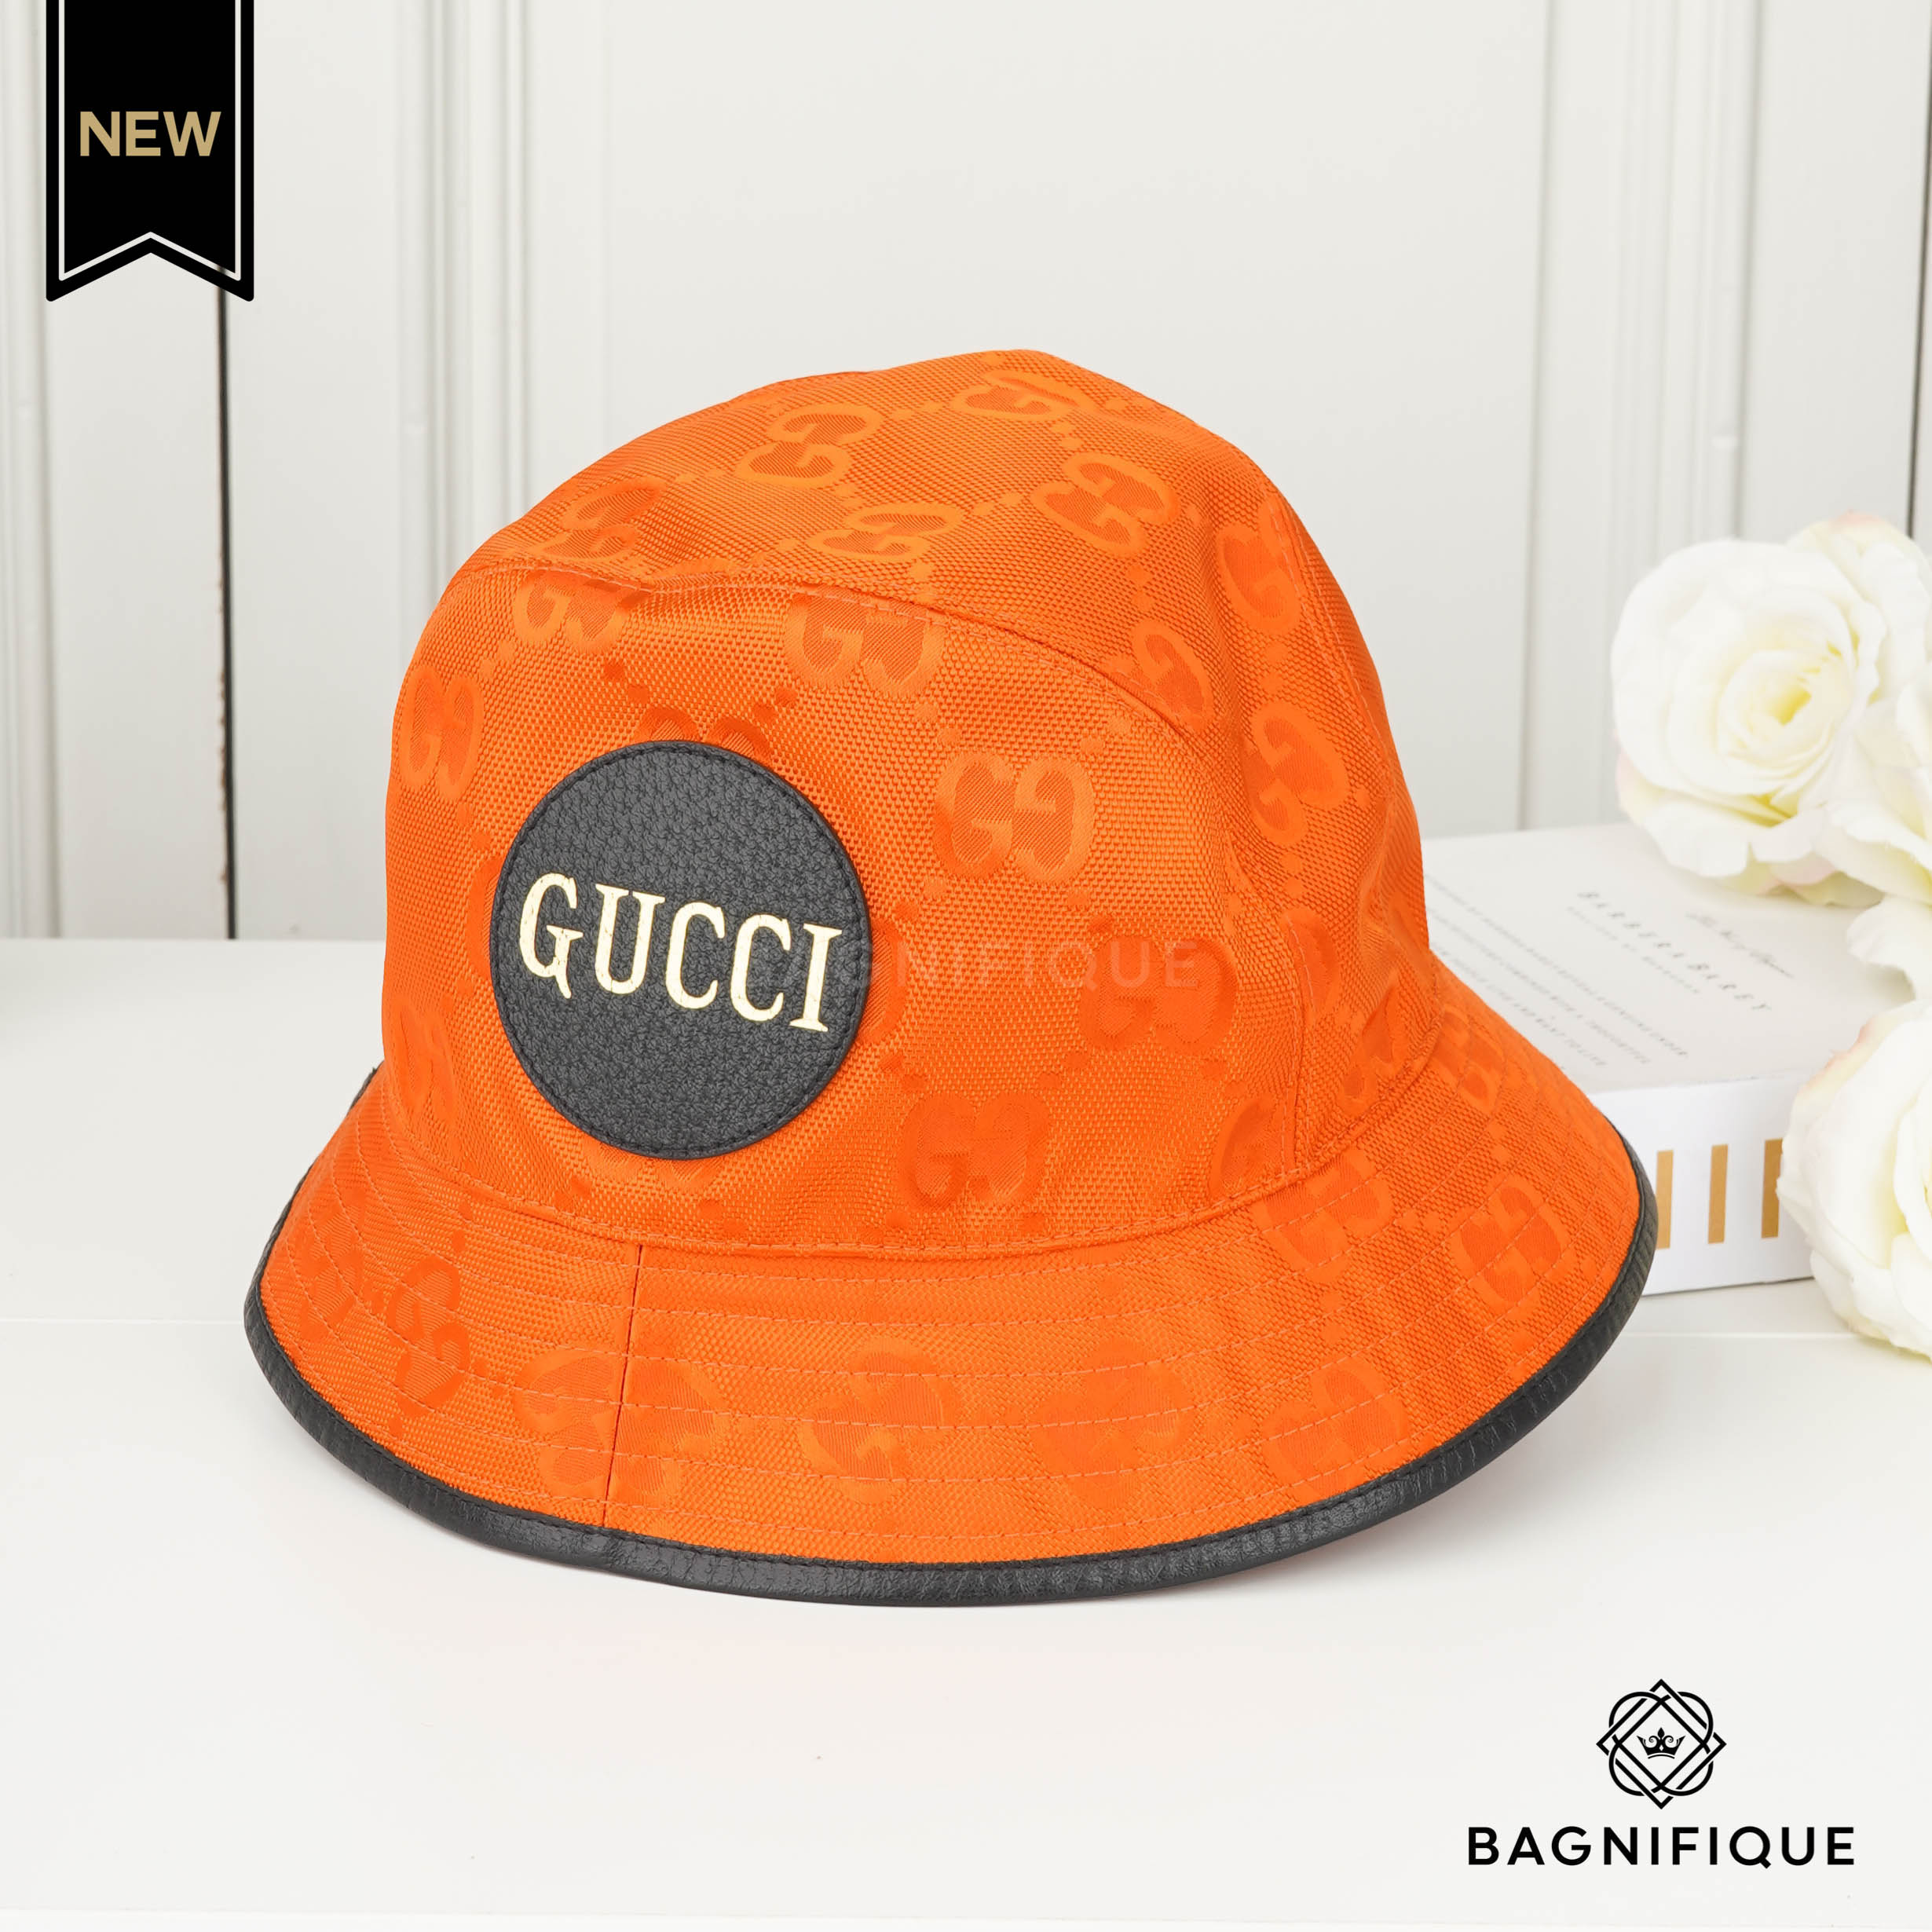 Gucci Off Grid ราคาถูก ซื้อออนไลน์ที่ - พ.ค. 2022 | Lazada.co.th